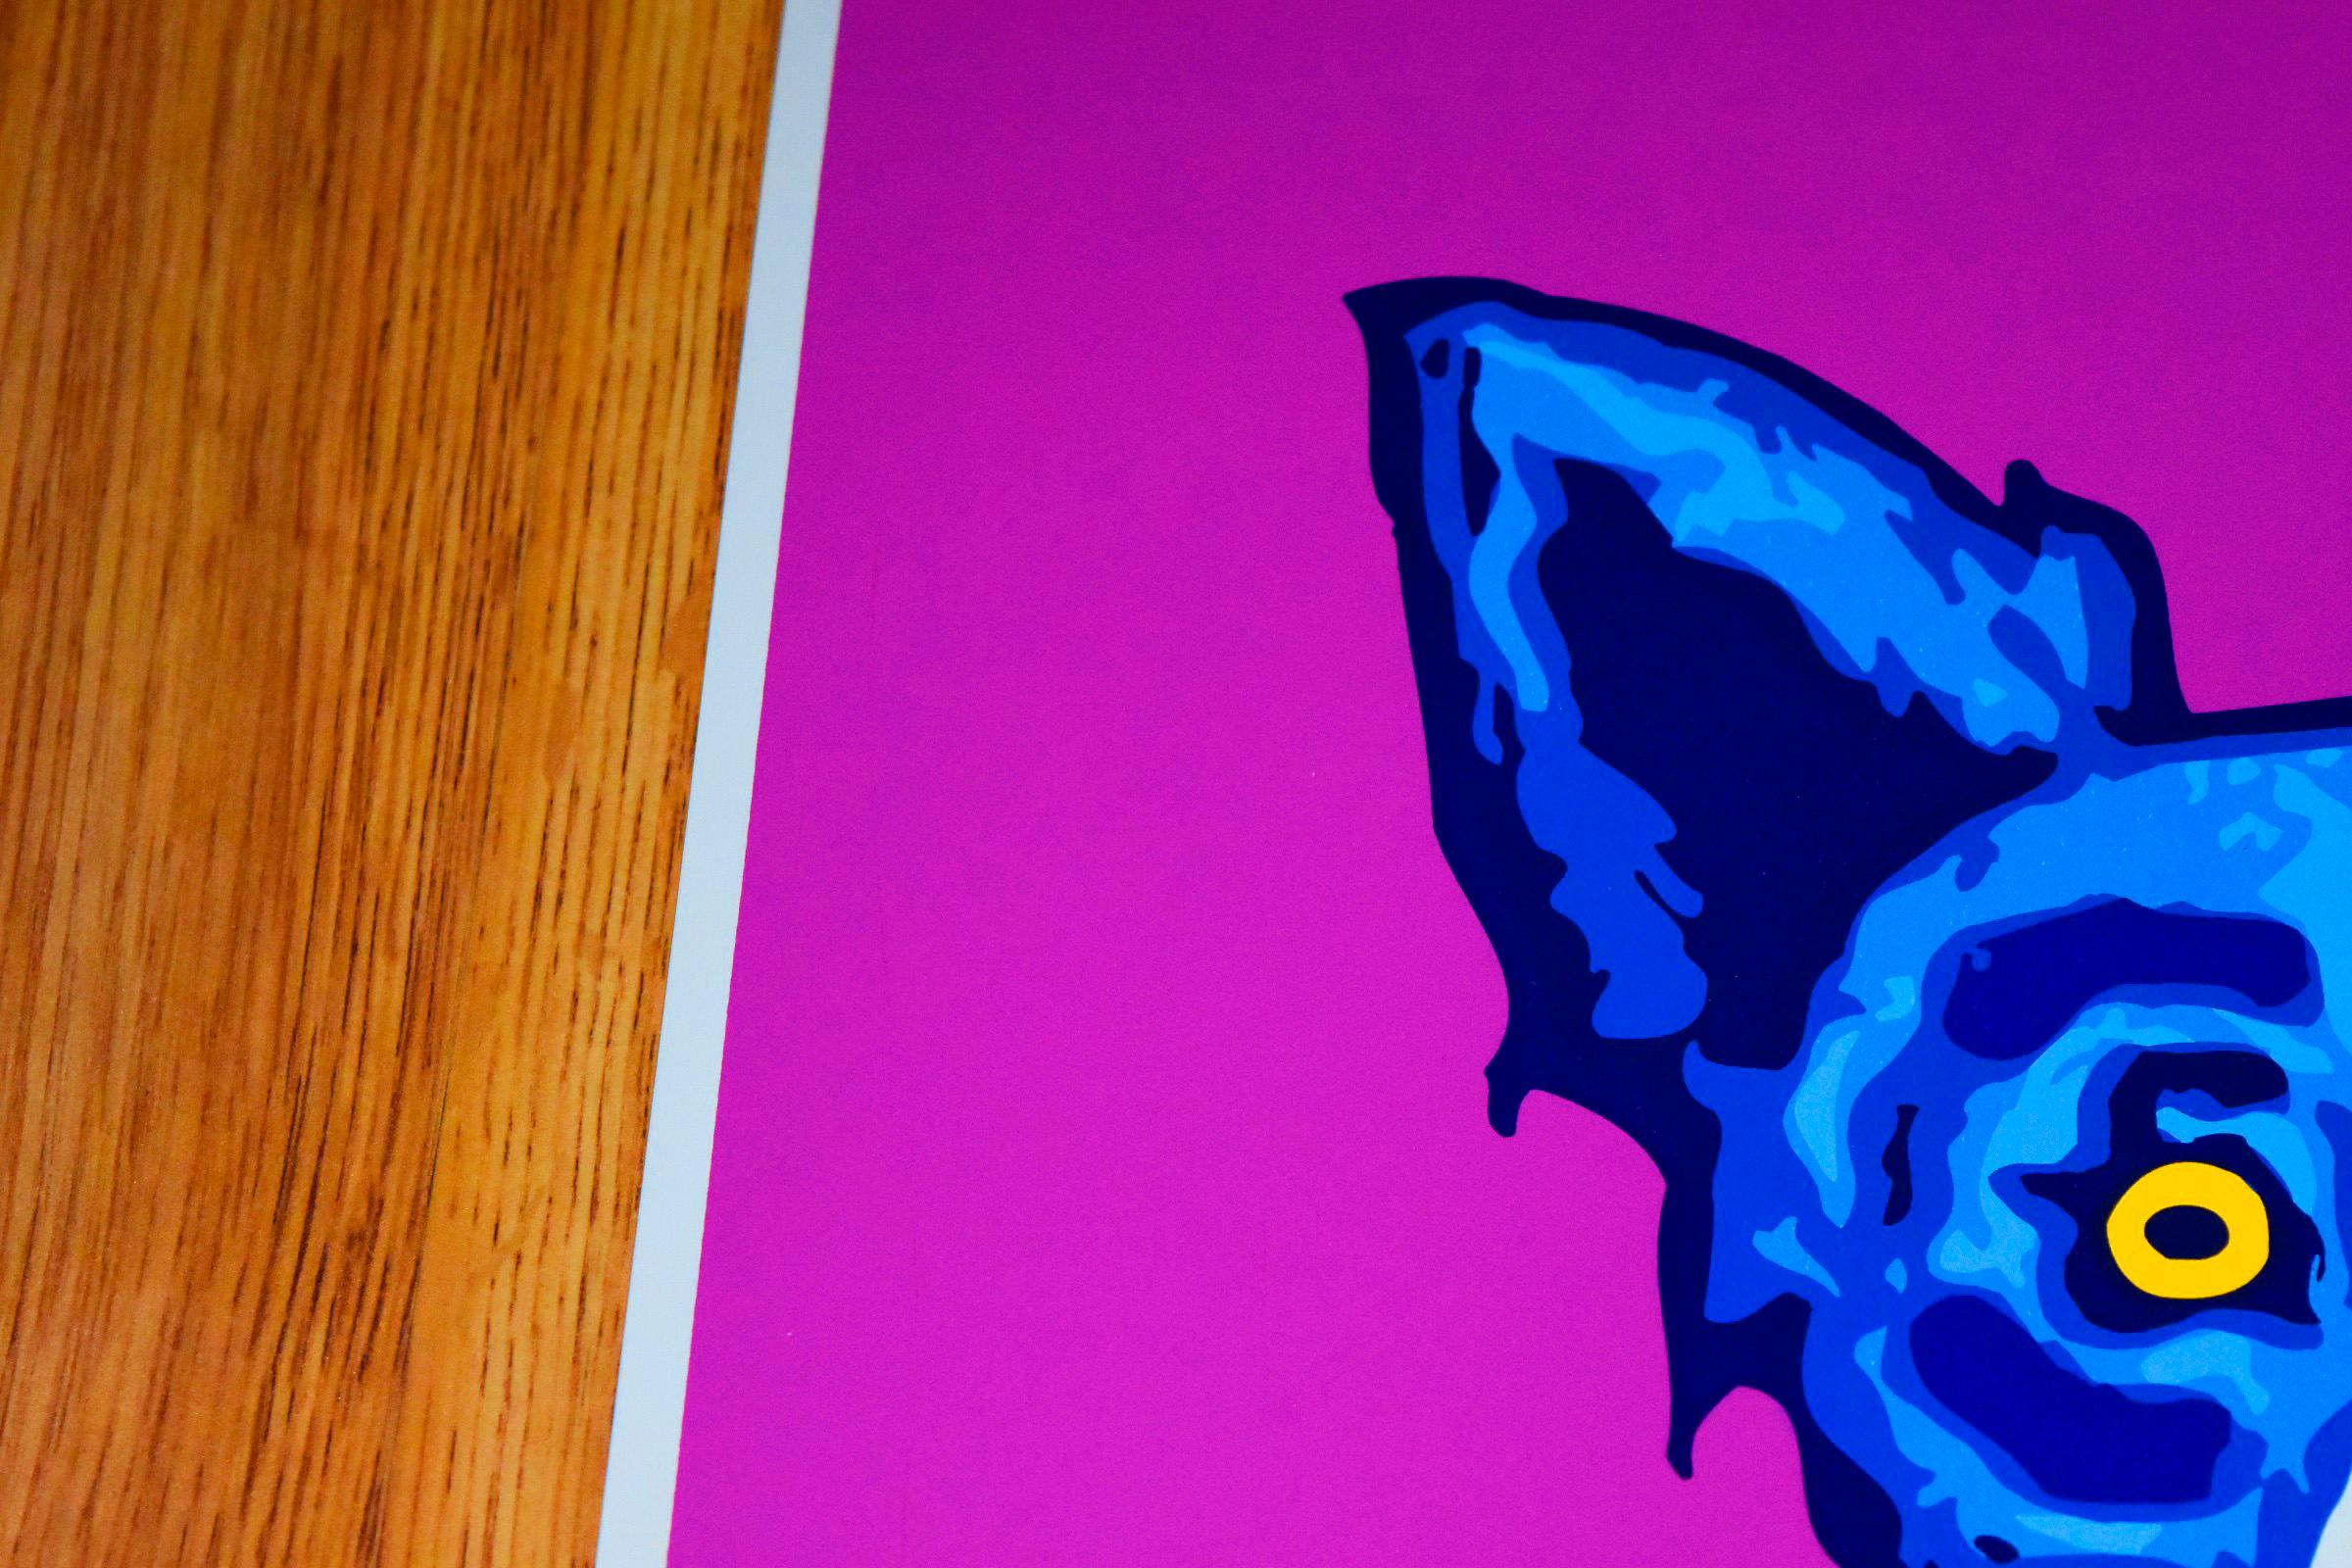 blue dog art prints